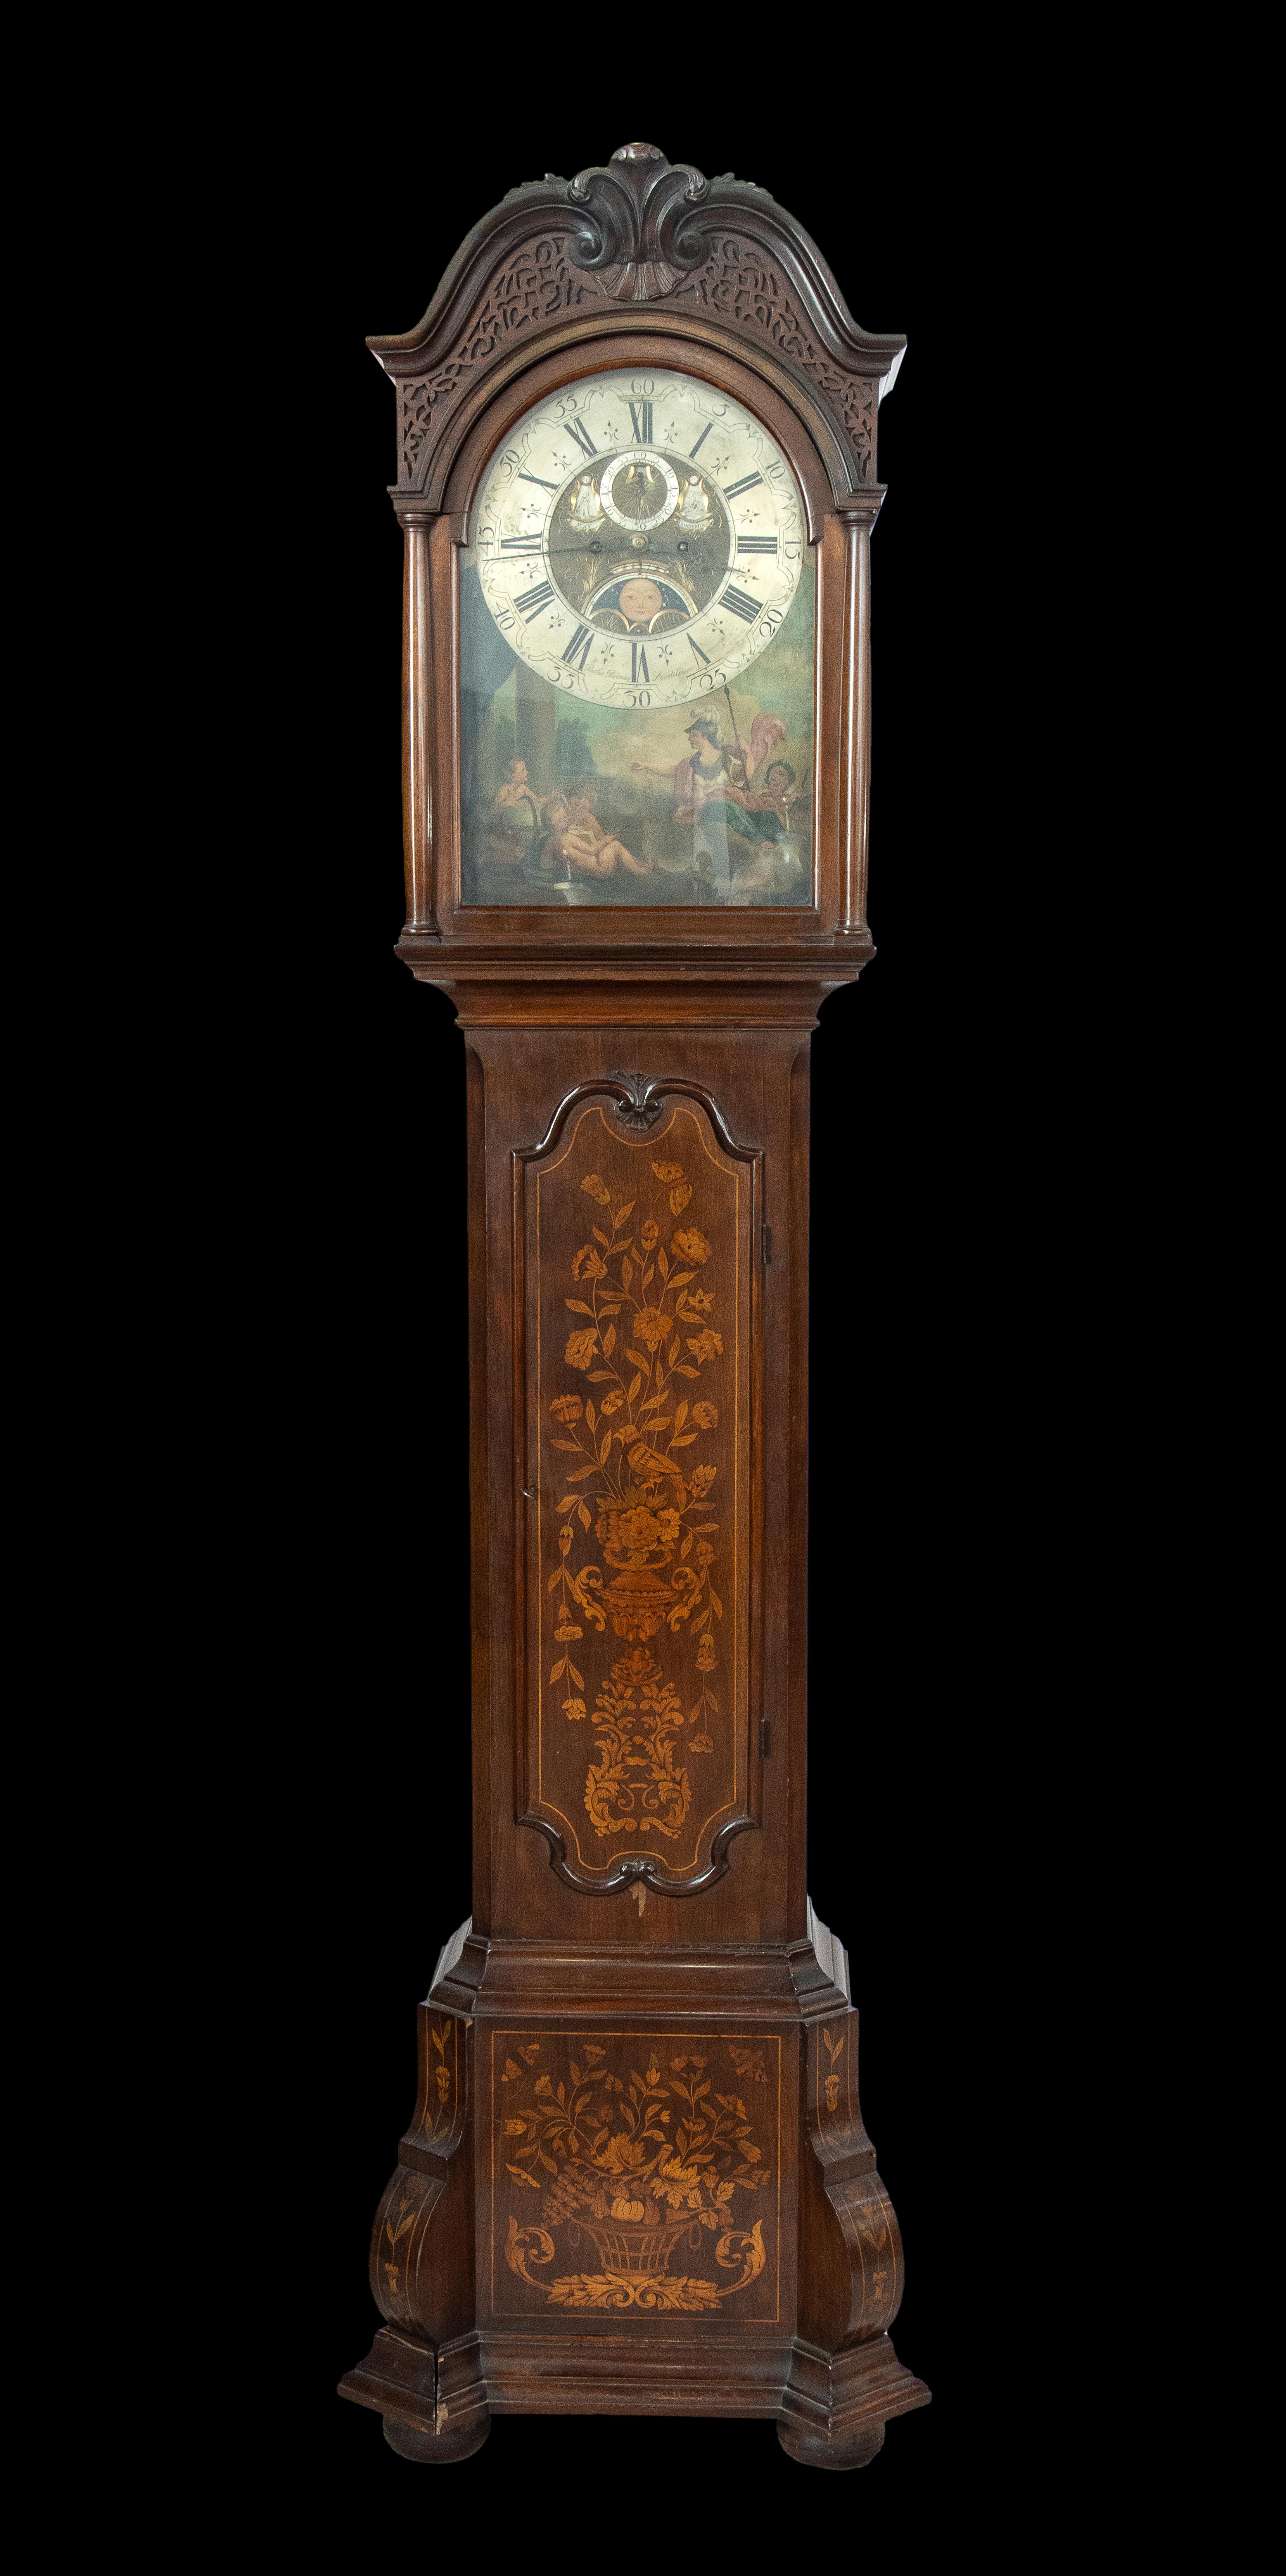 Grandfather-Uhr aus Mahagoni im Louis-XV-Stil des 18. Jahrhunderts, signiert Paulus Bramer 1750 (Louis XV.) im Angebot